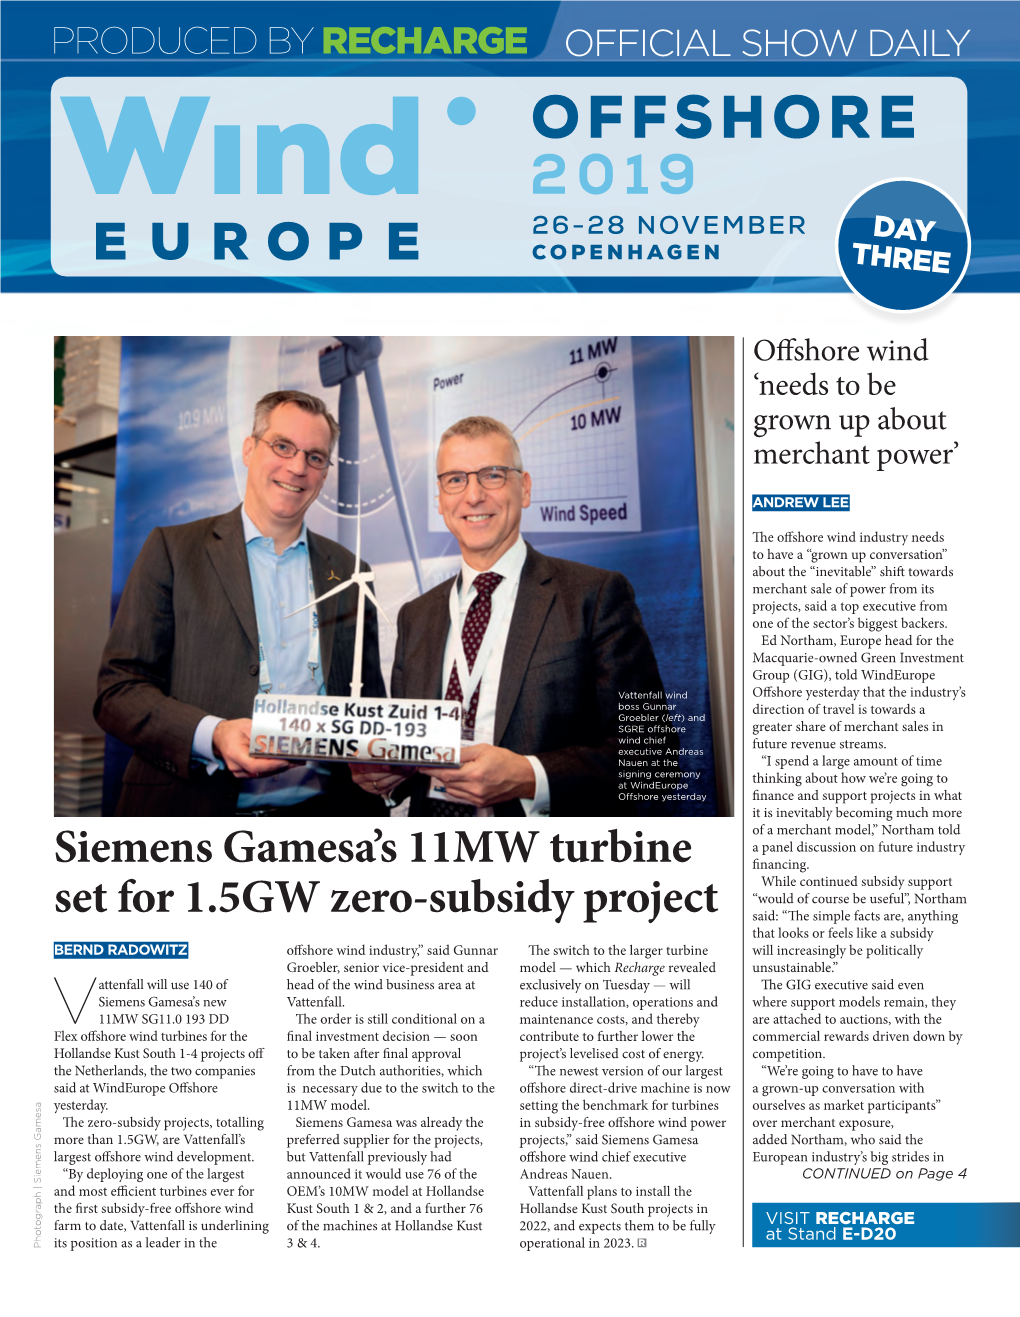 Siemens Gamesa's 11MW Turbine Set for 1.5GW Zero-Subsidy Project